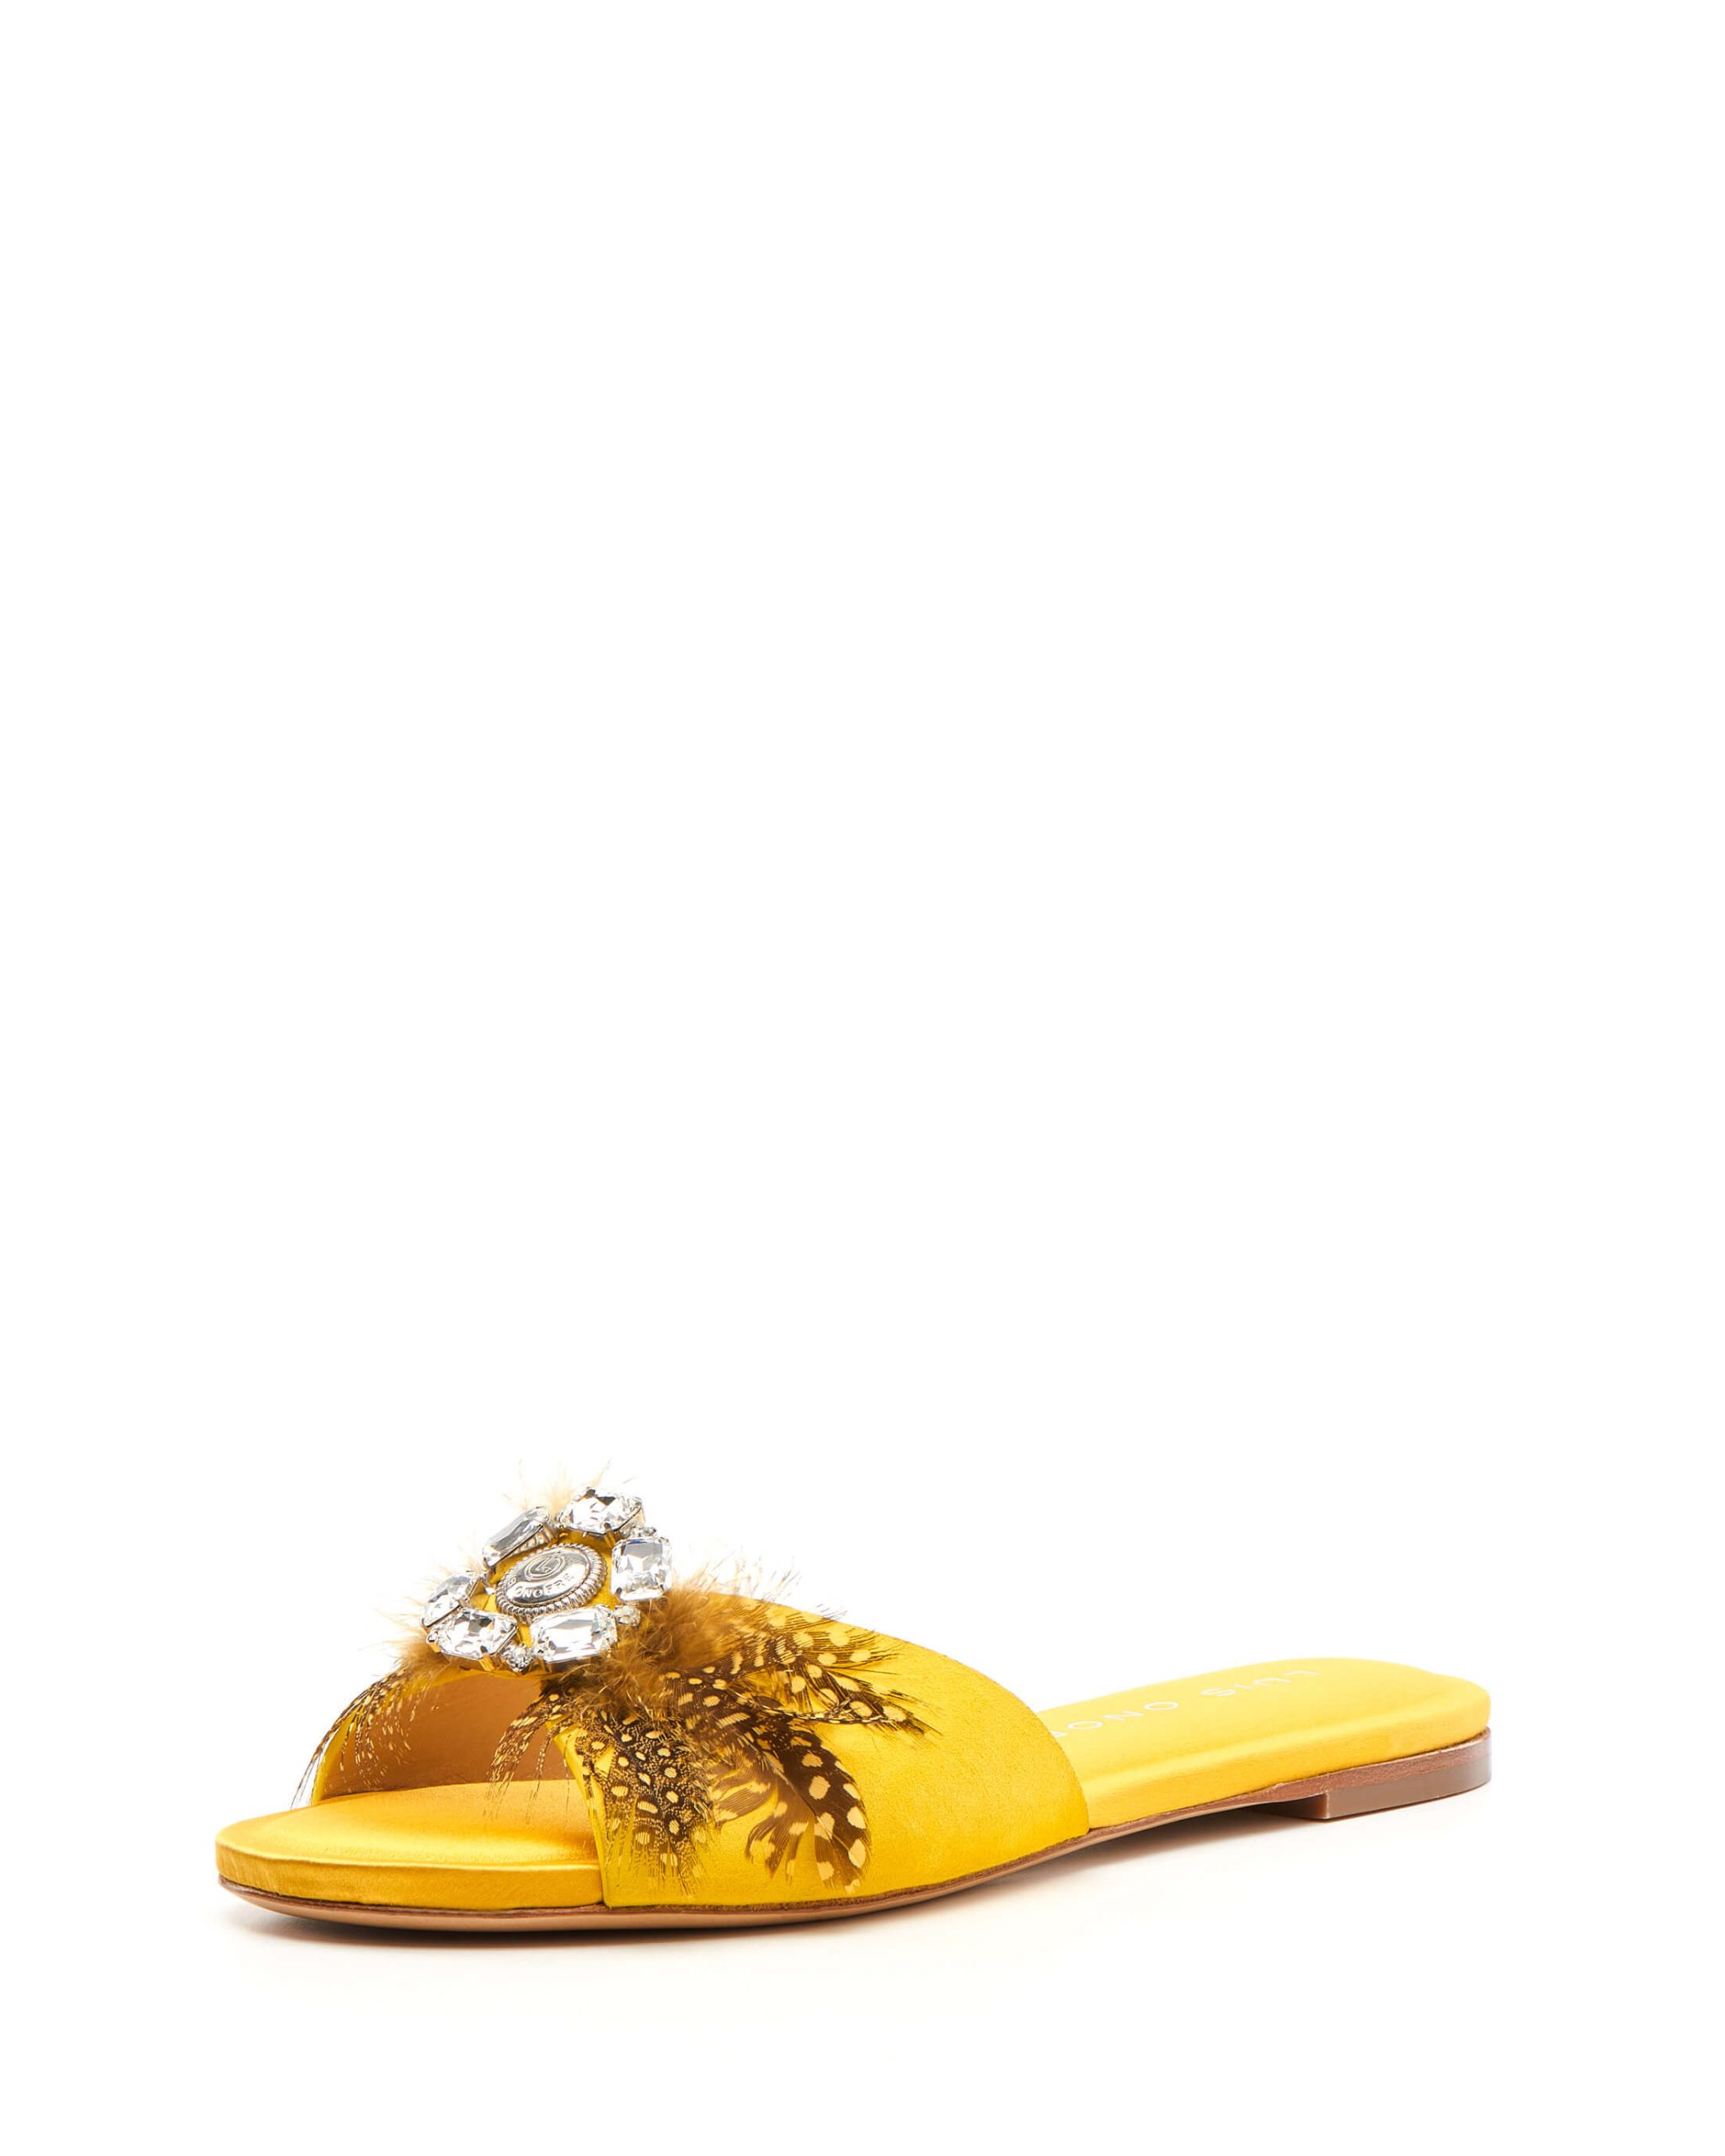 Luis Onofre Portuguese Shoes FW22 – 5331_02 – Theseus Yellow-2